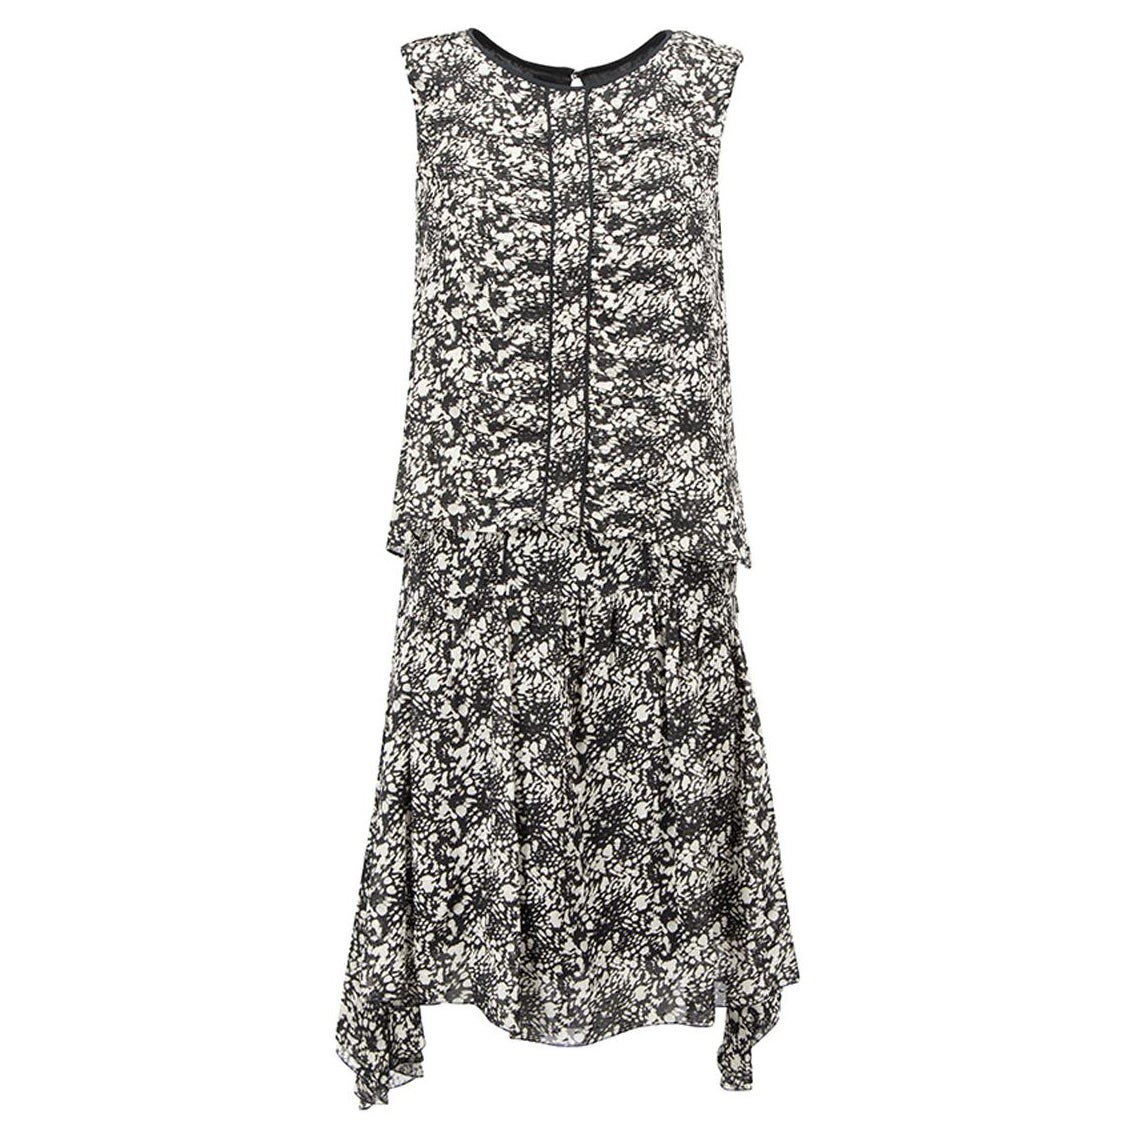 Belstaff Women's Grey Mottled Print Sleeveless Mini Dress